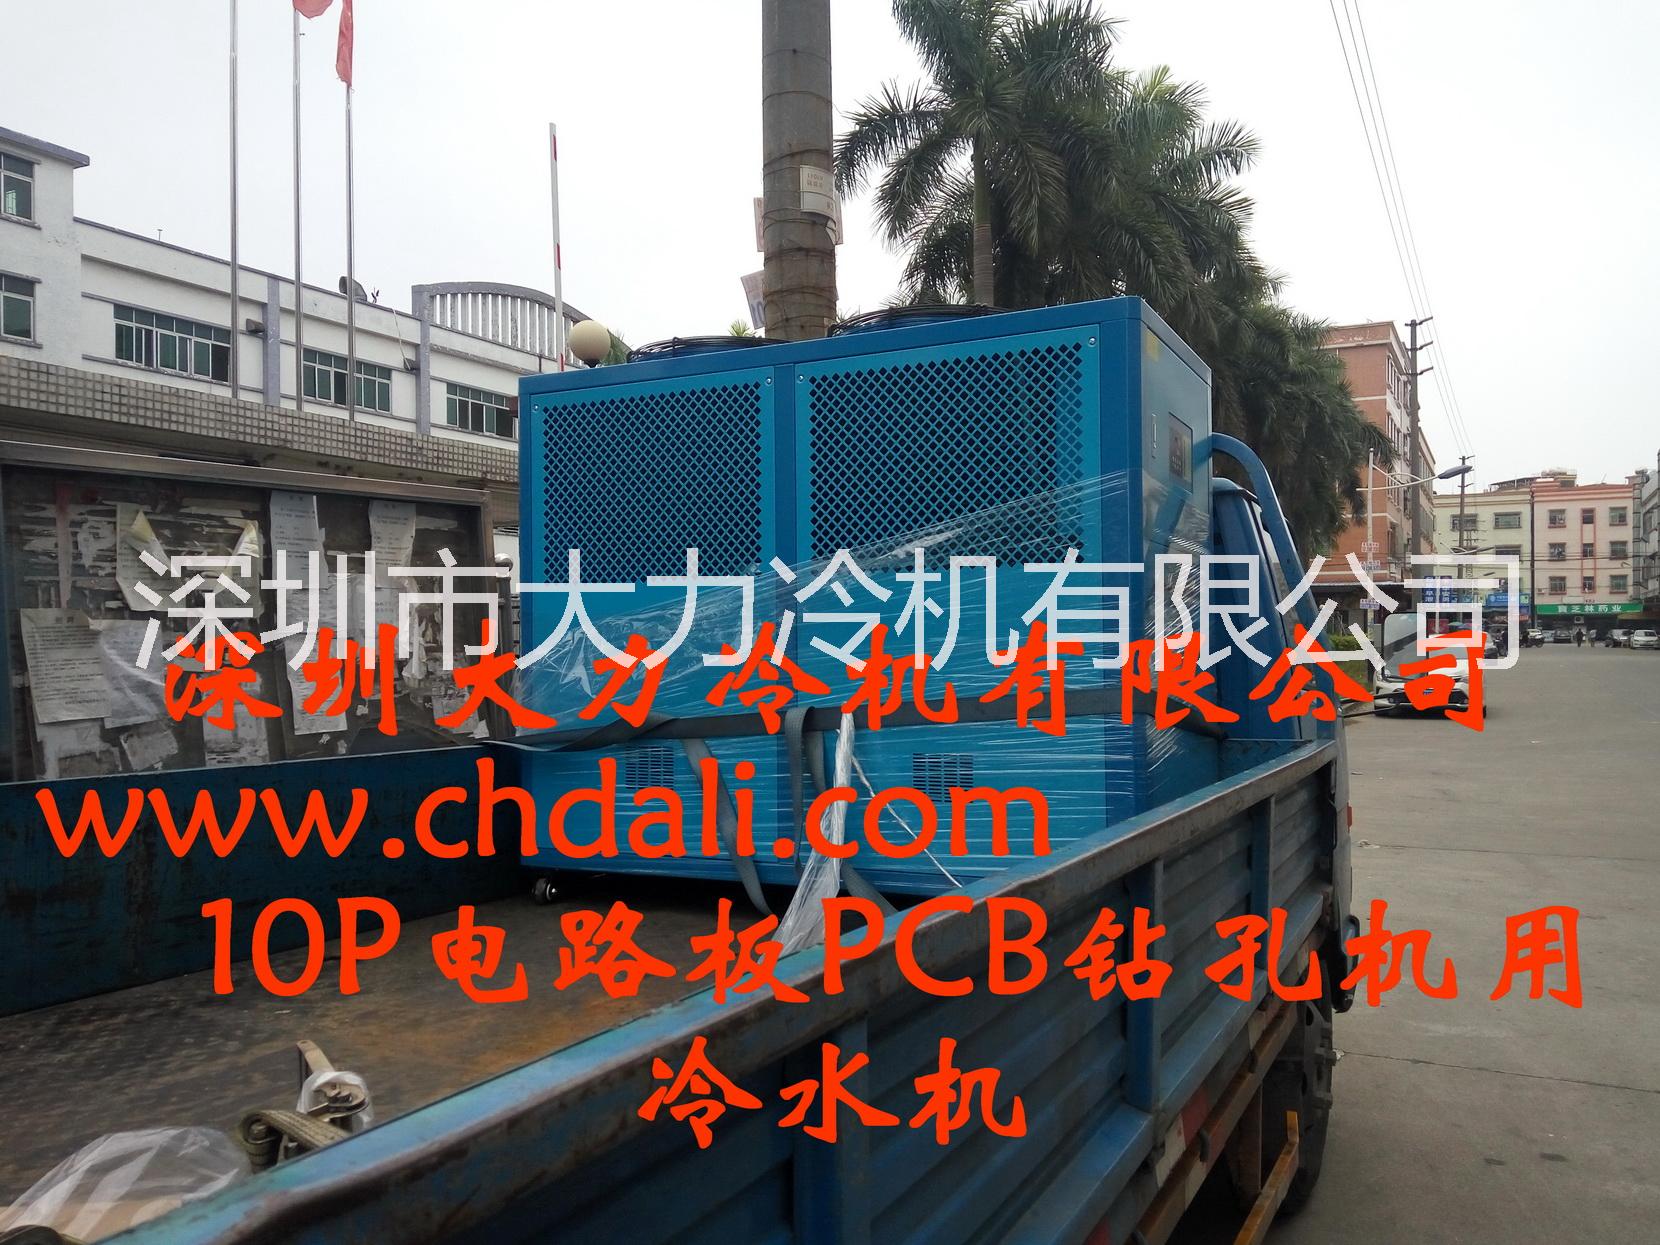 10P电路板PCB钻孔机用冷水机图片